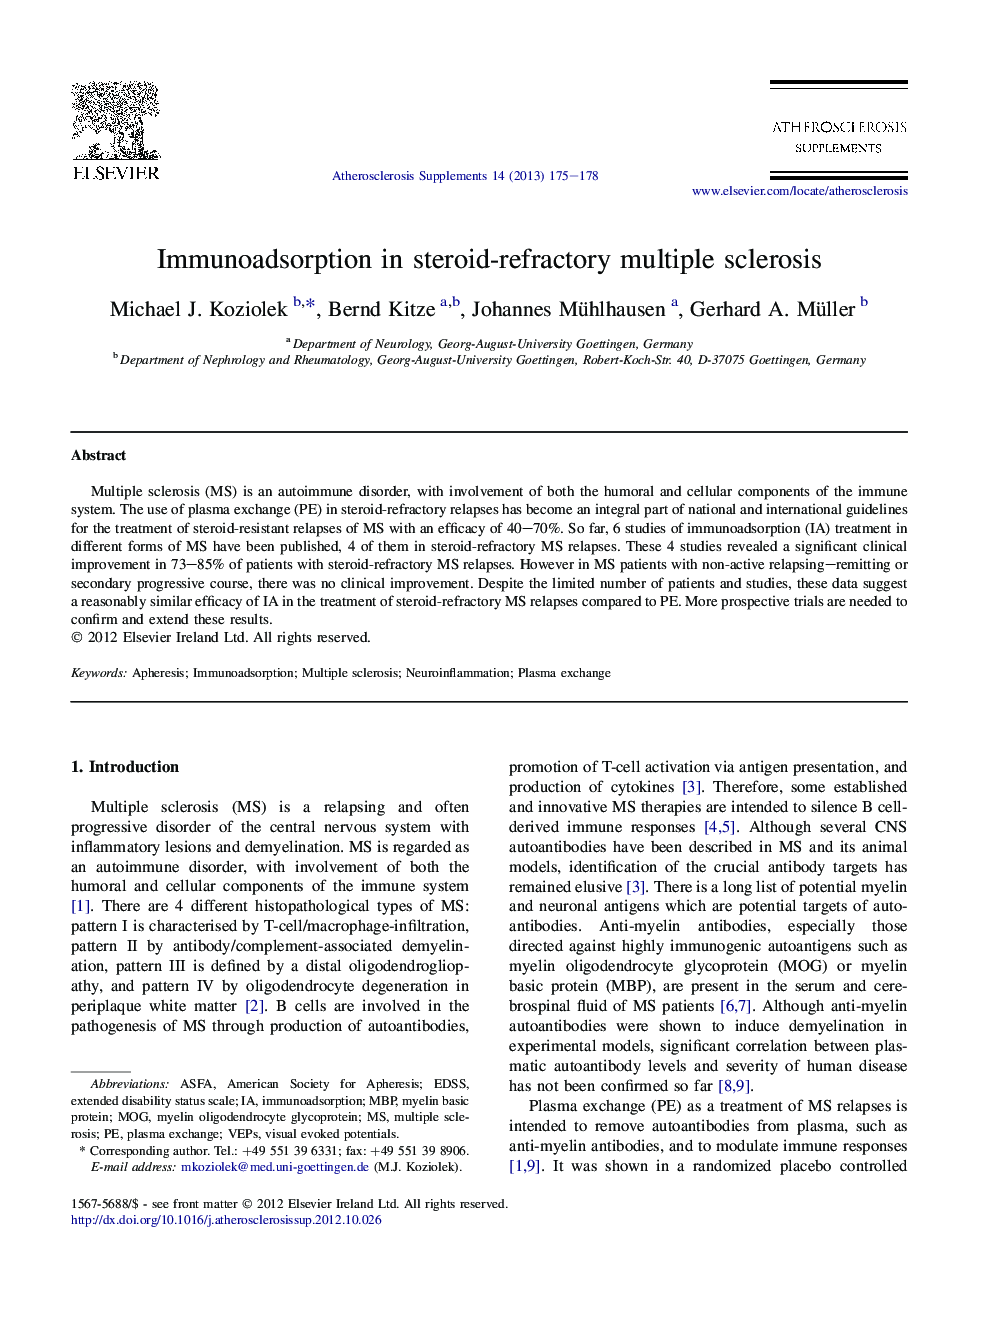 Immunoadsorption in steroid-refractory multiple sclerosis